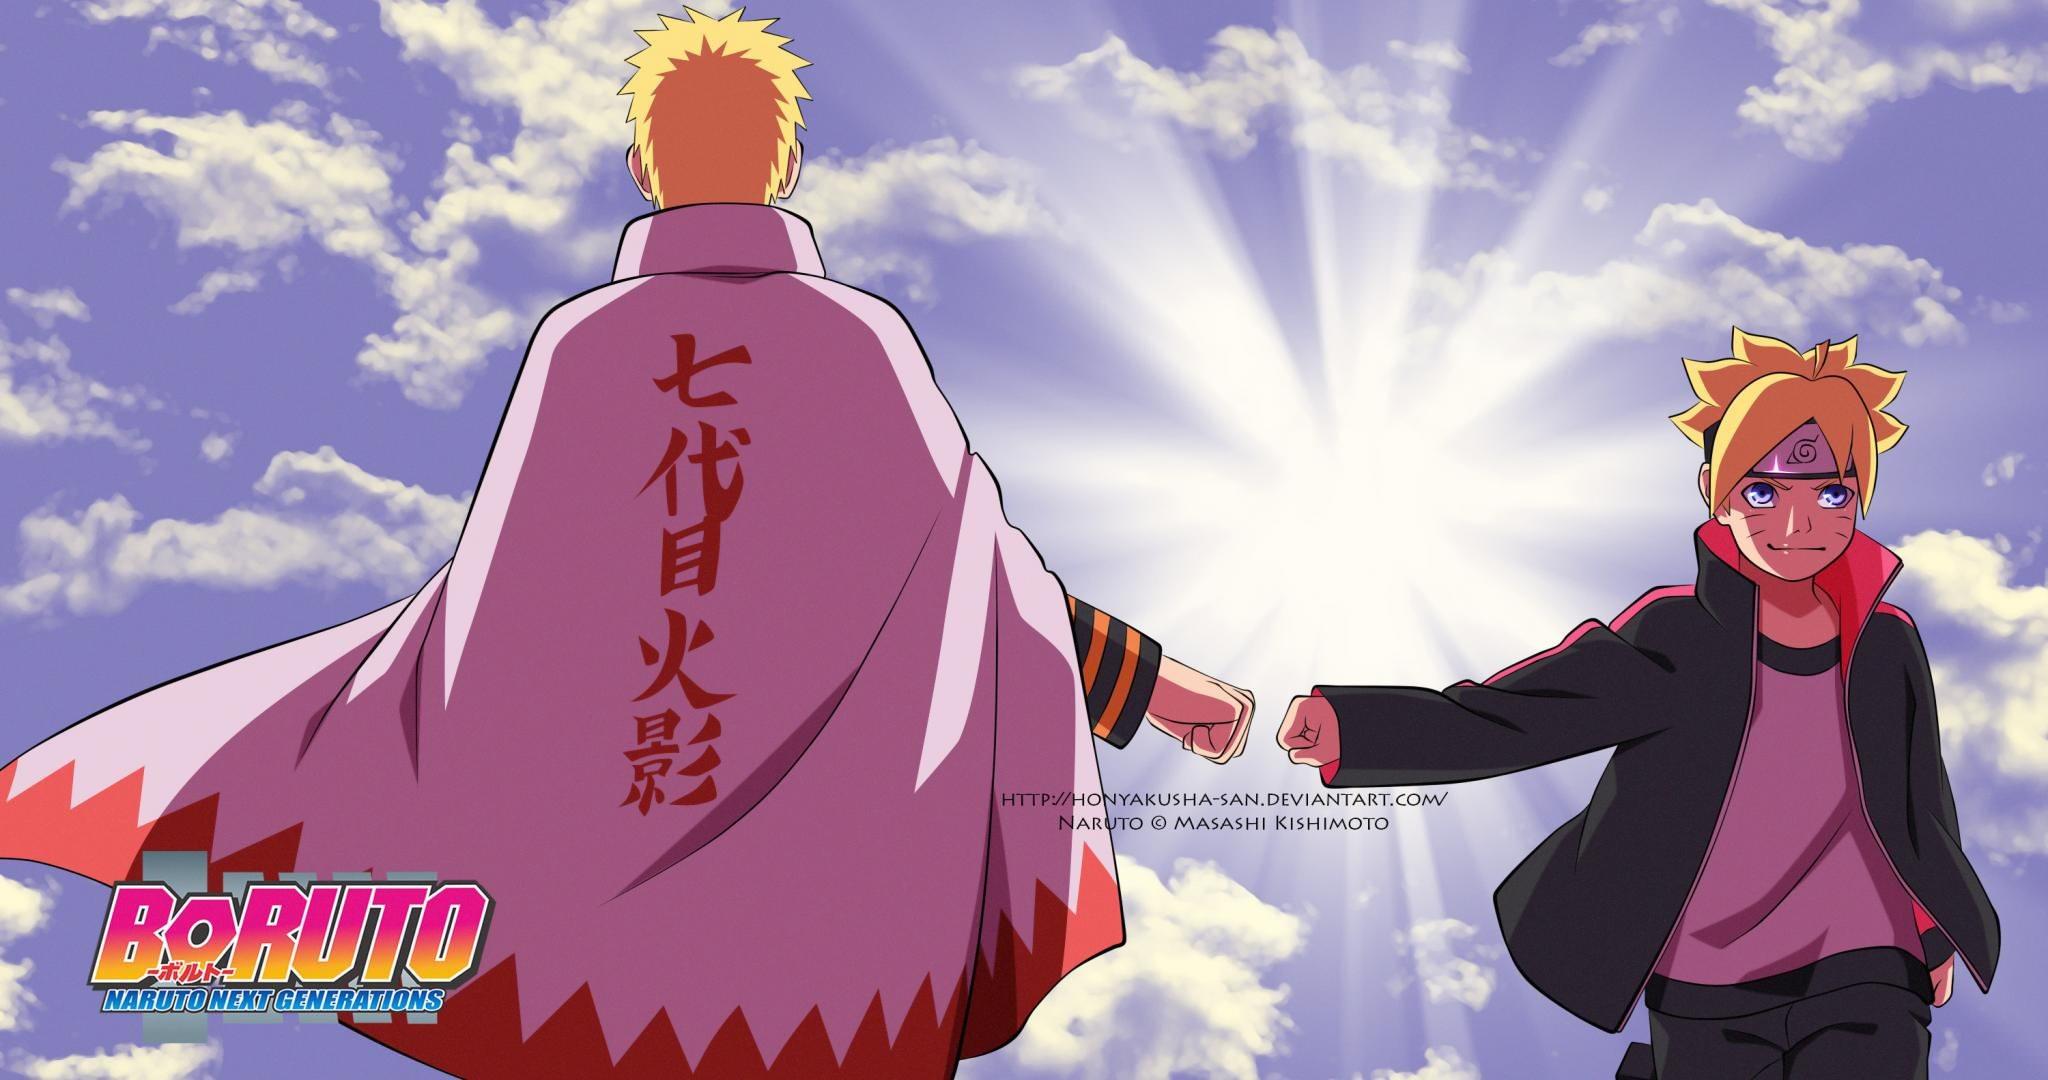 Boruto Naruto Next Generations Wallpapers - Top Free Boruto Naruto Next Generations Backgrounds ...